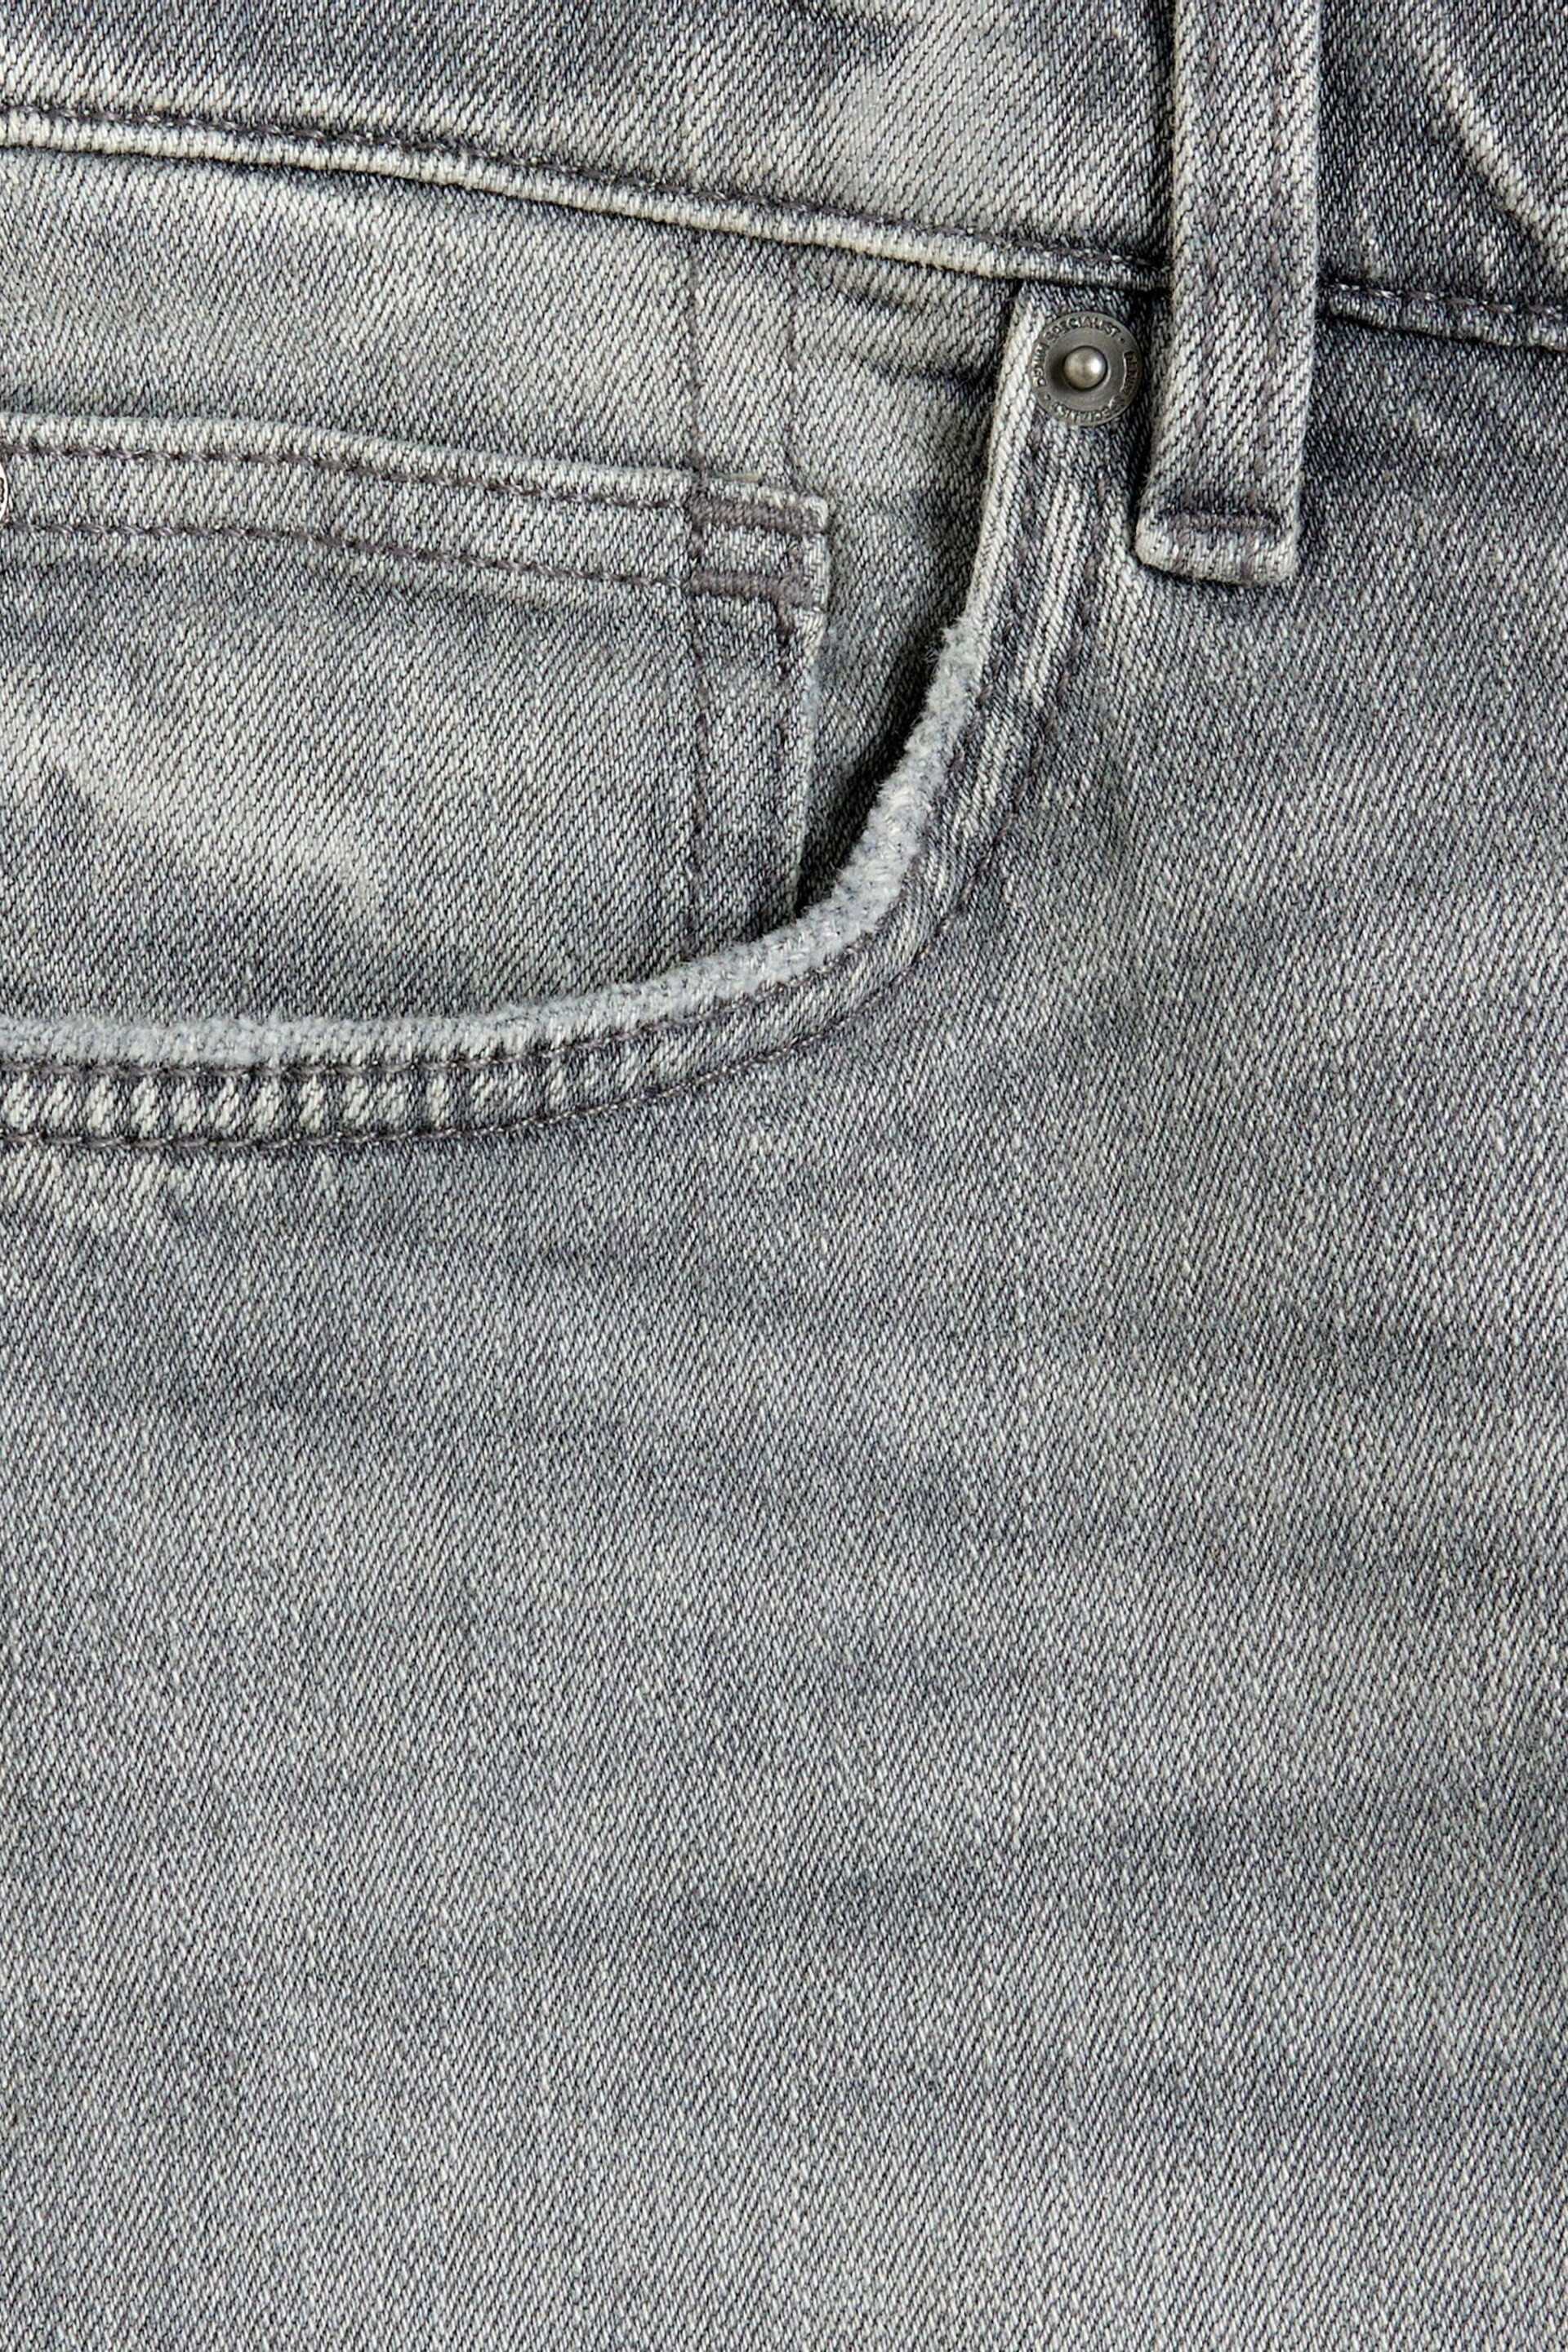 River Island Grey Slim Denim Shorts - Image 4 of 4